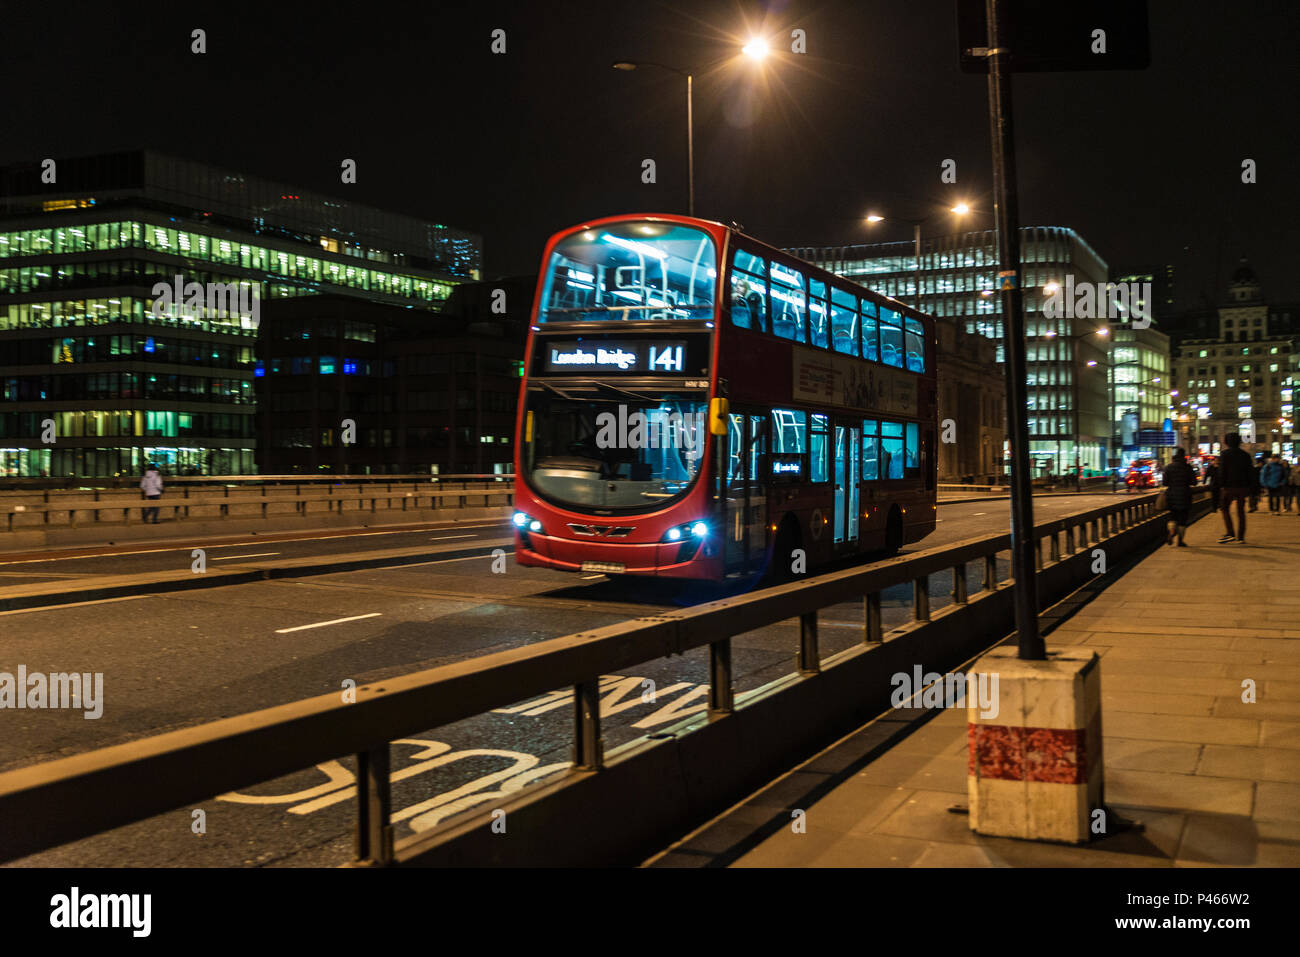 London, England UK  - December 30, 2018: Bus circulating on a bridge at night with people around in London, England UK Stock Photo